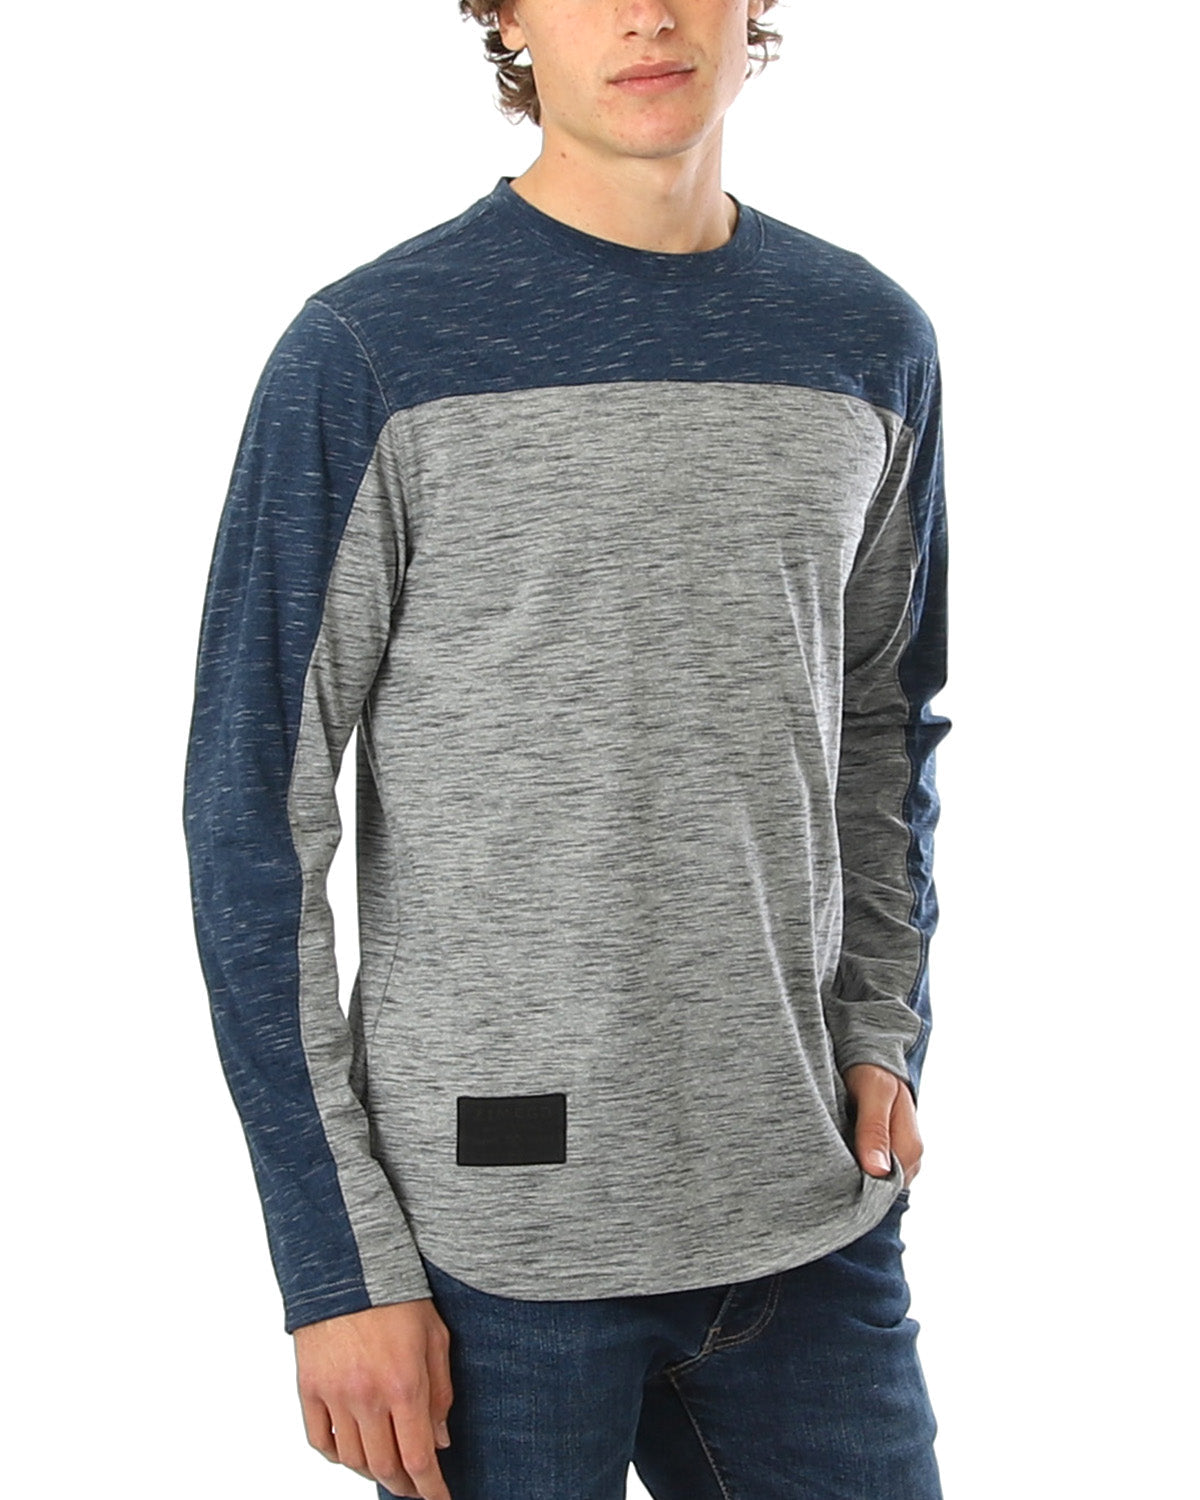 Men's Fashion Color Block Long Sleeve Curved Hemline Athletic Hiphop Shirt